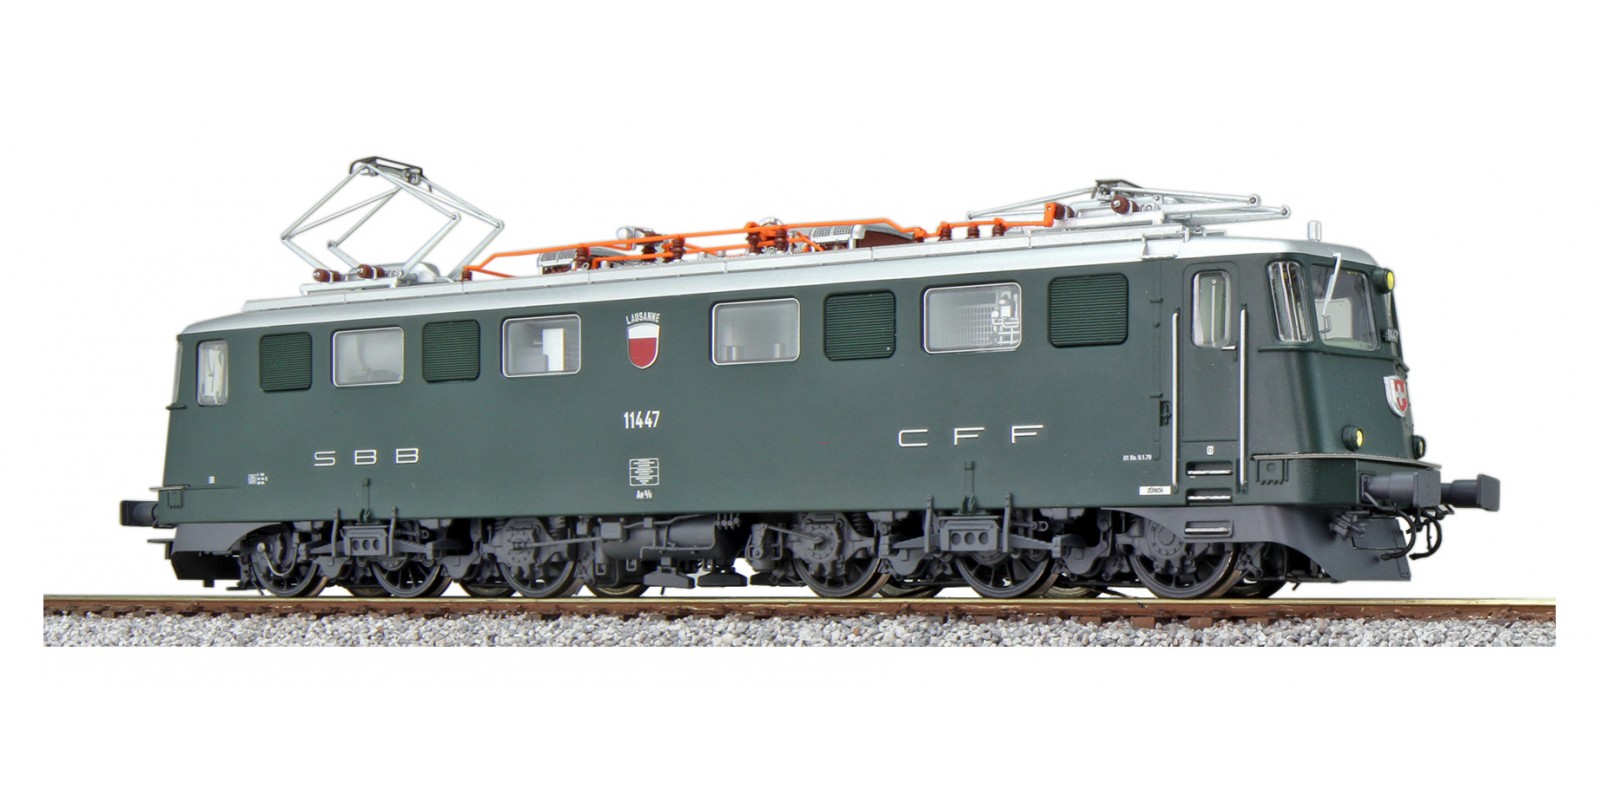 ES31536 Electric locomotive, H0, AE6/6, 11447 Lausanne SBB, green, Ep. IV, prototype condition around 1980, LokSound + Pantograph, DC/AC